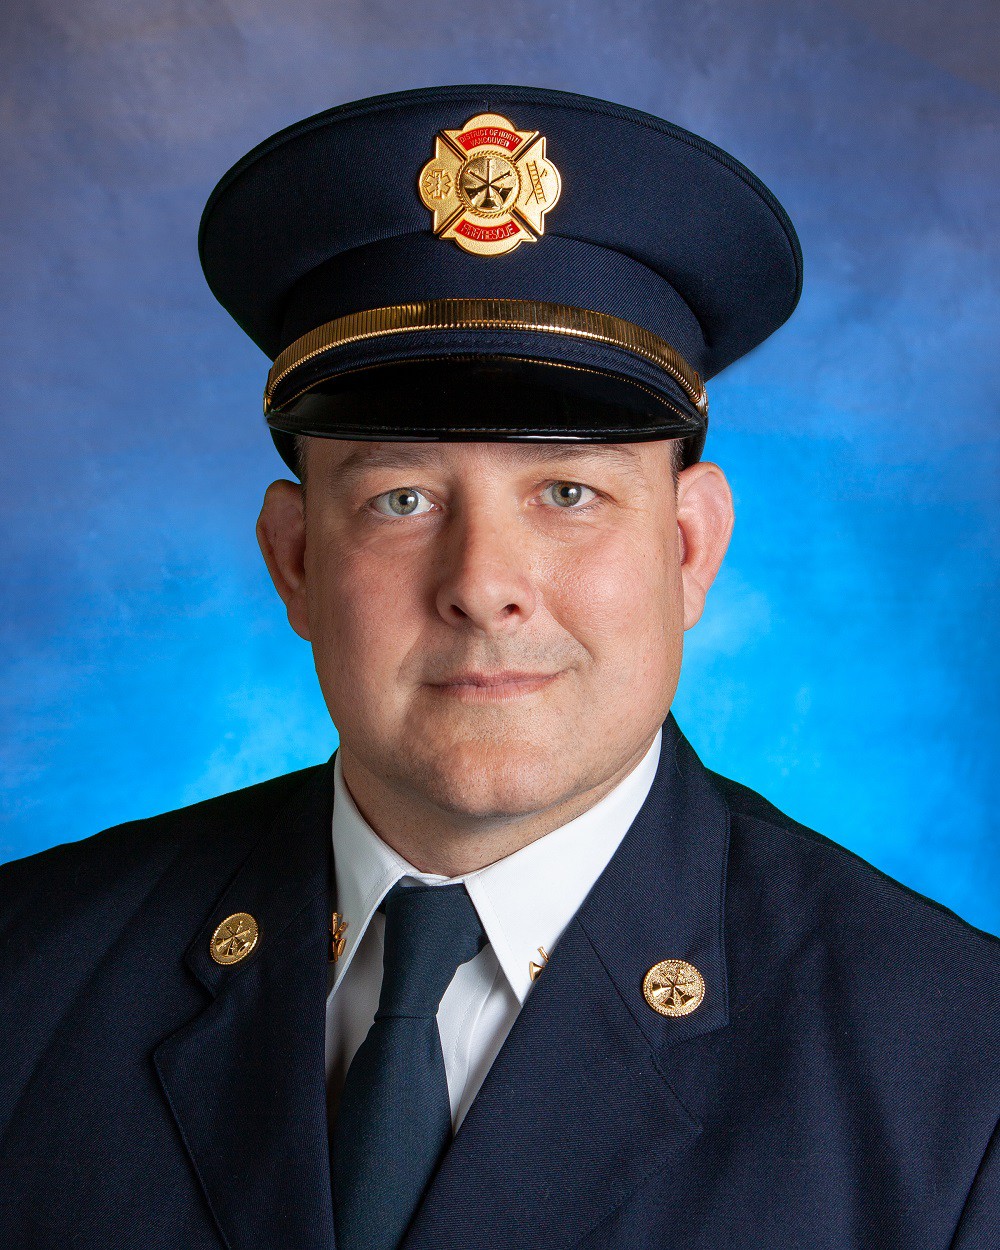 Assistant fire chief jeremy duncan